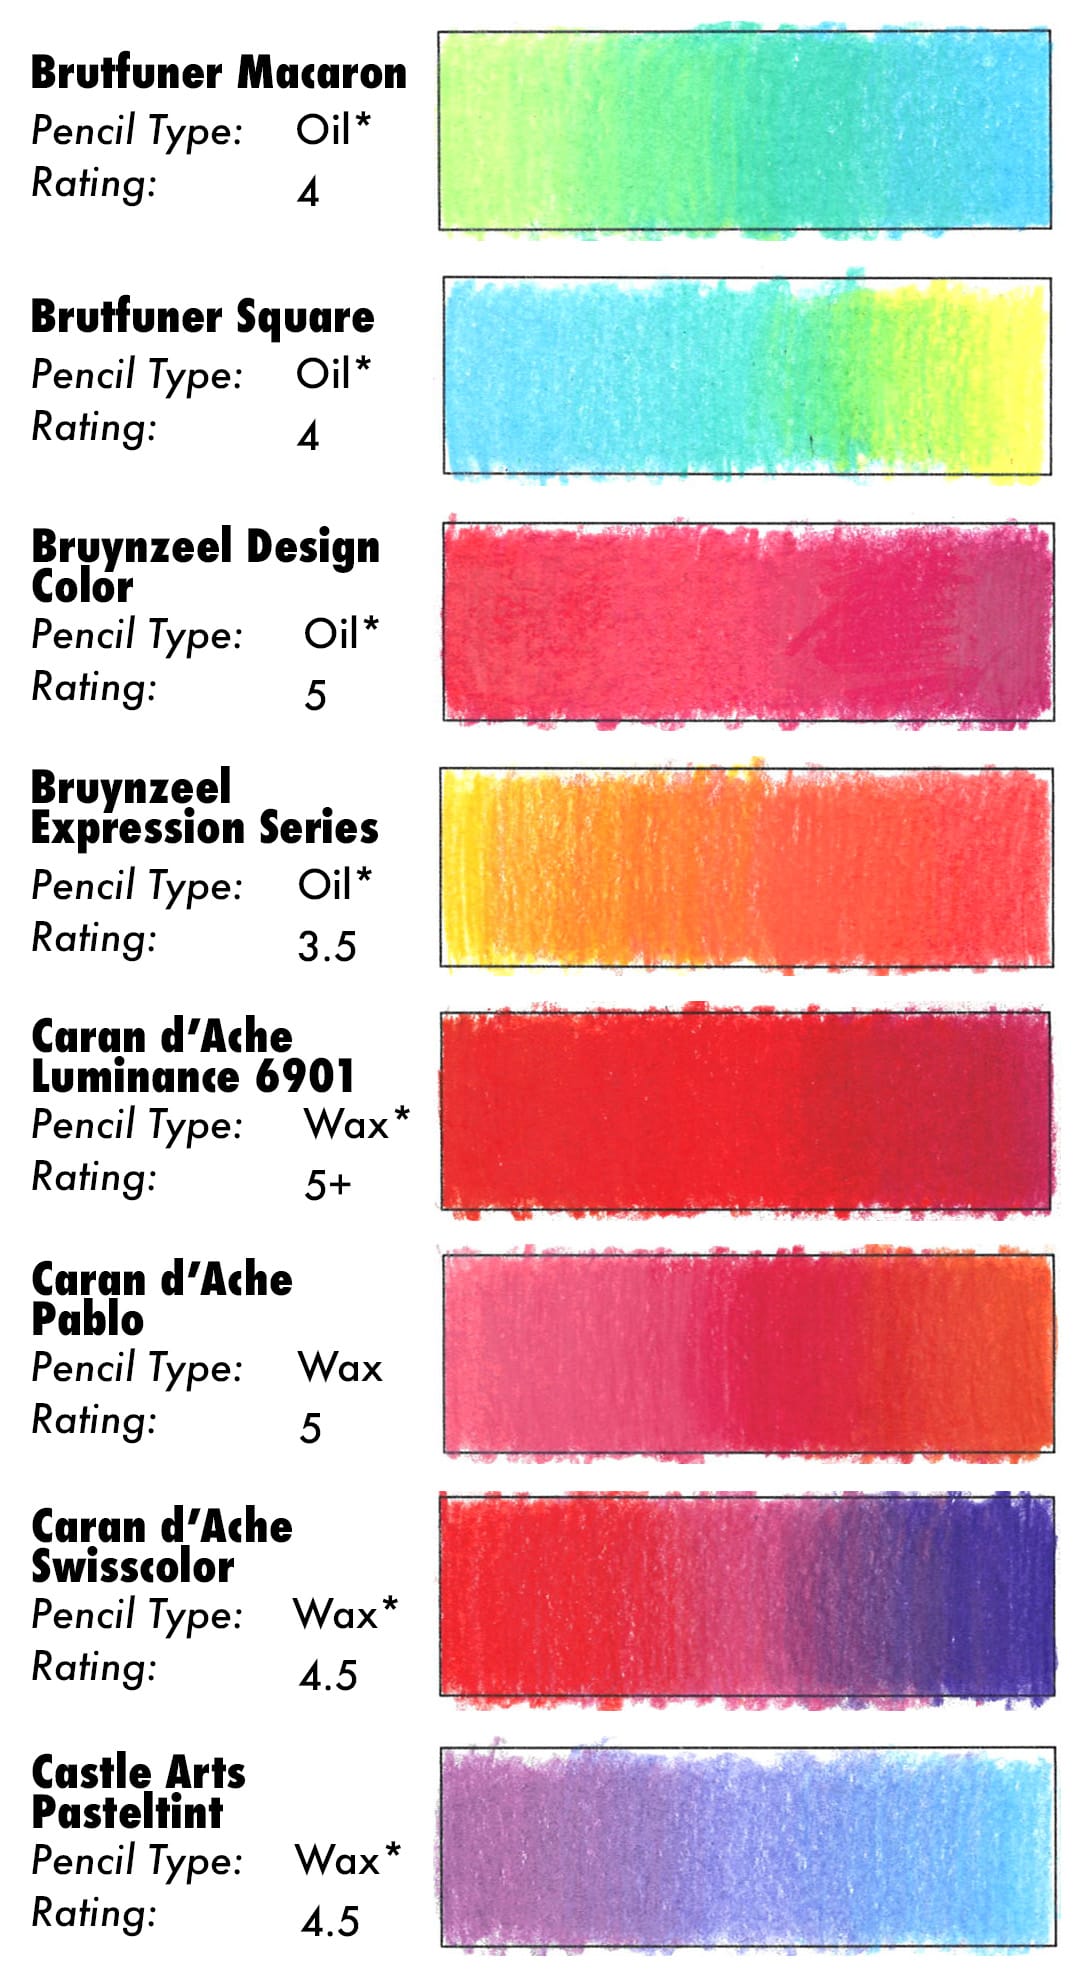 Colored Pencil Blending Results for Brutfuner Macaron, Brutfuner Square, Bruynzeel Design Color, Bruynzeel Expression Series, Caran d'Ache Luminance 6901, Caran d'Ache Pablo, Caran d'Ache Swisscolor, and Castle Arts Pasteltint.